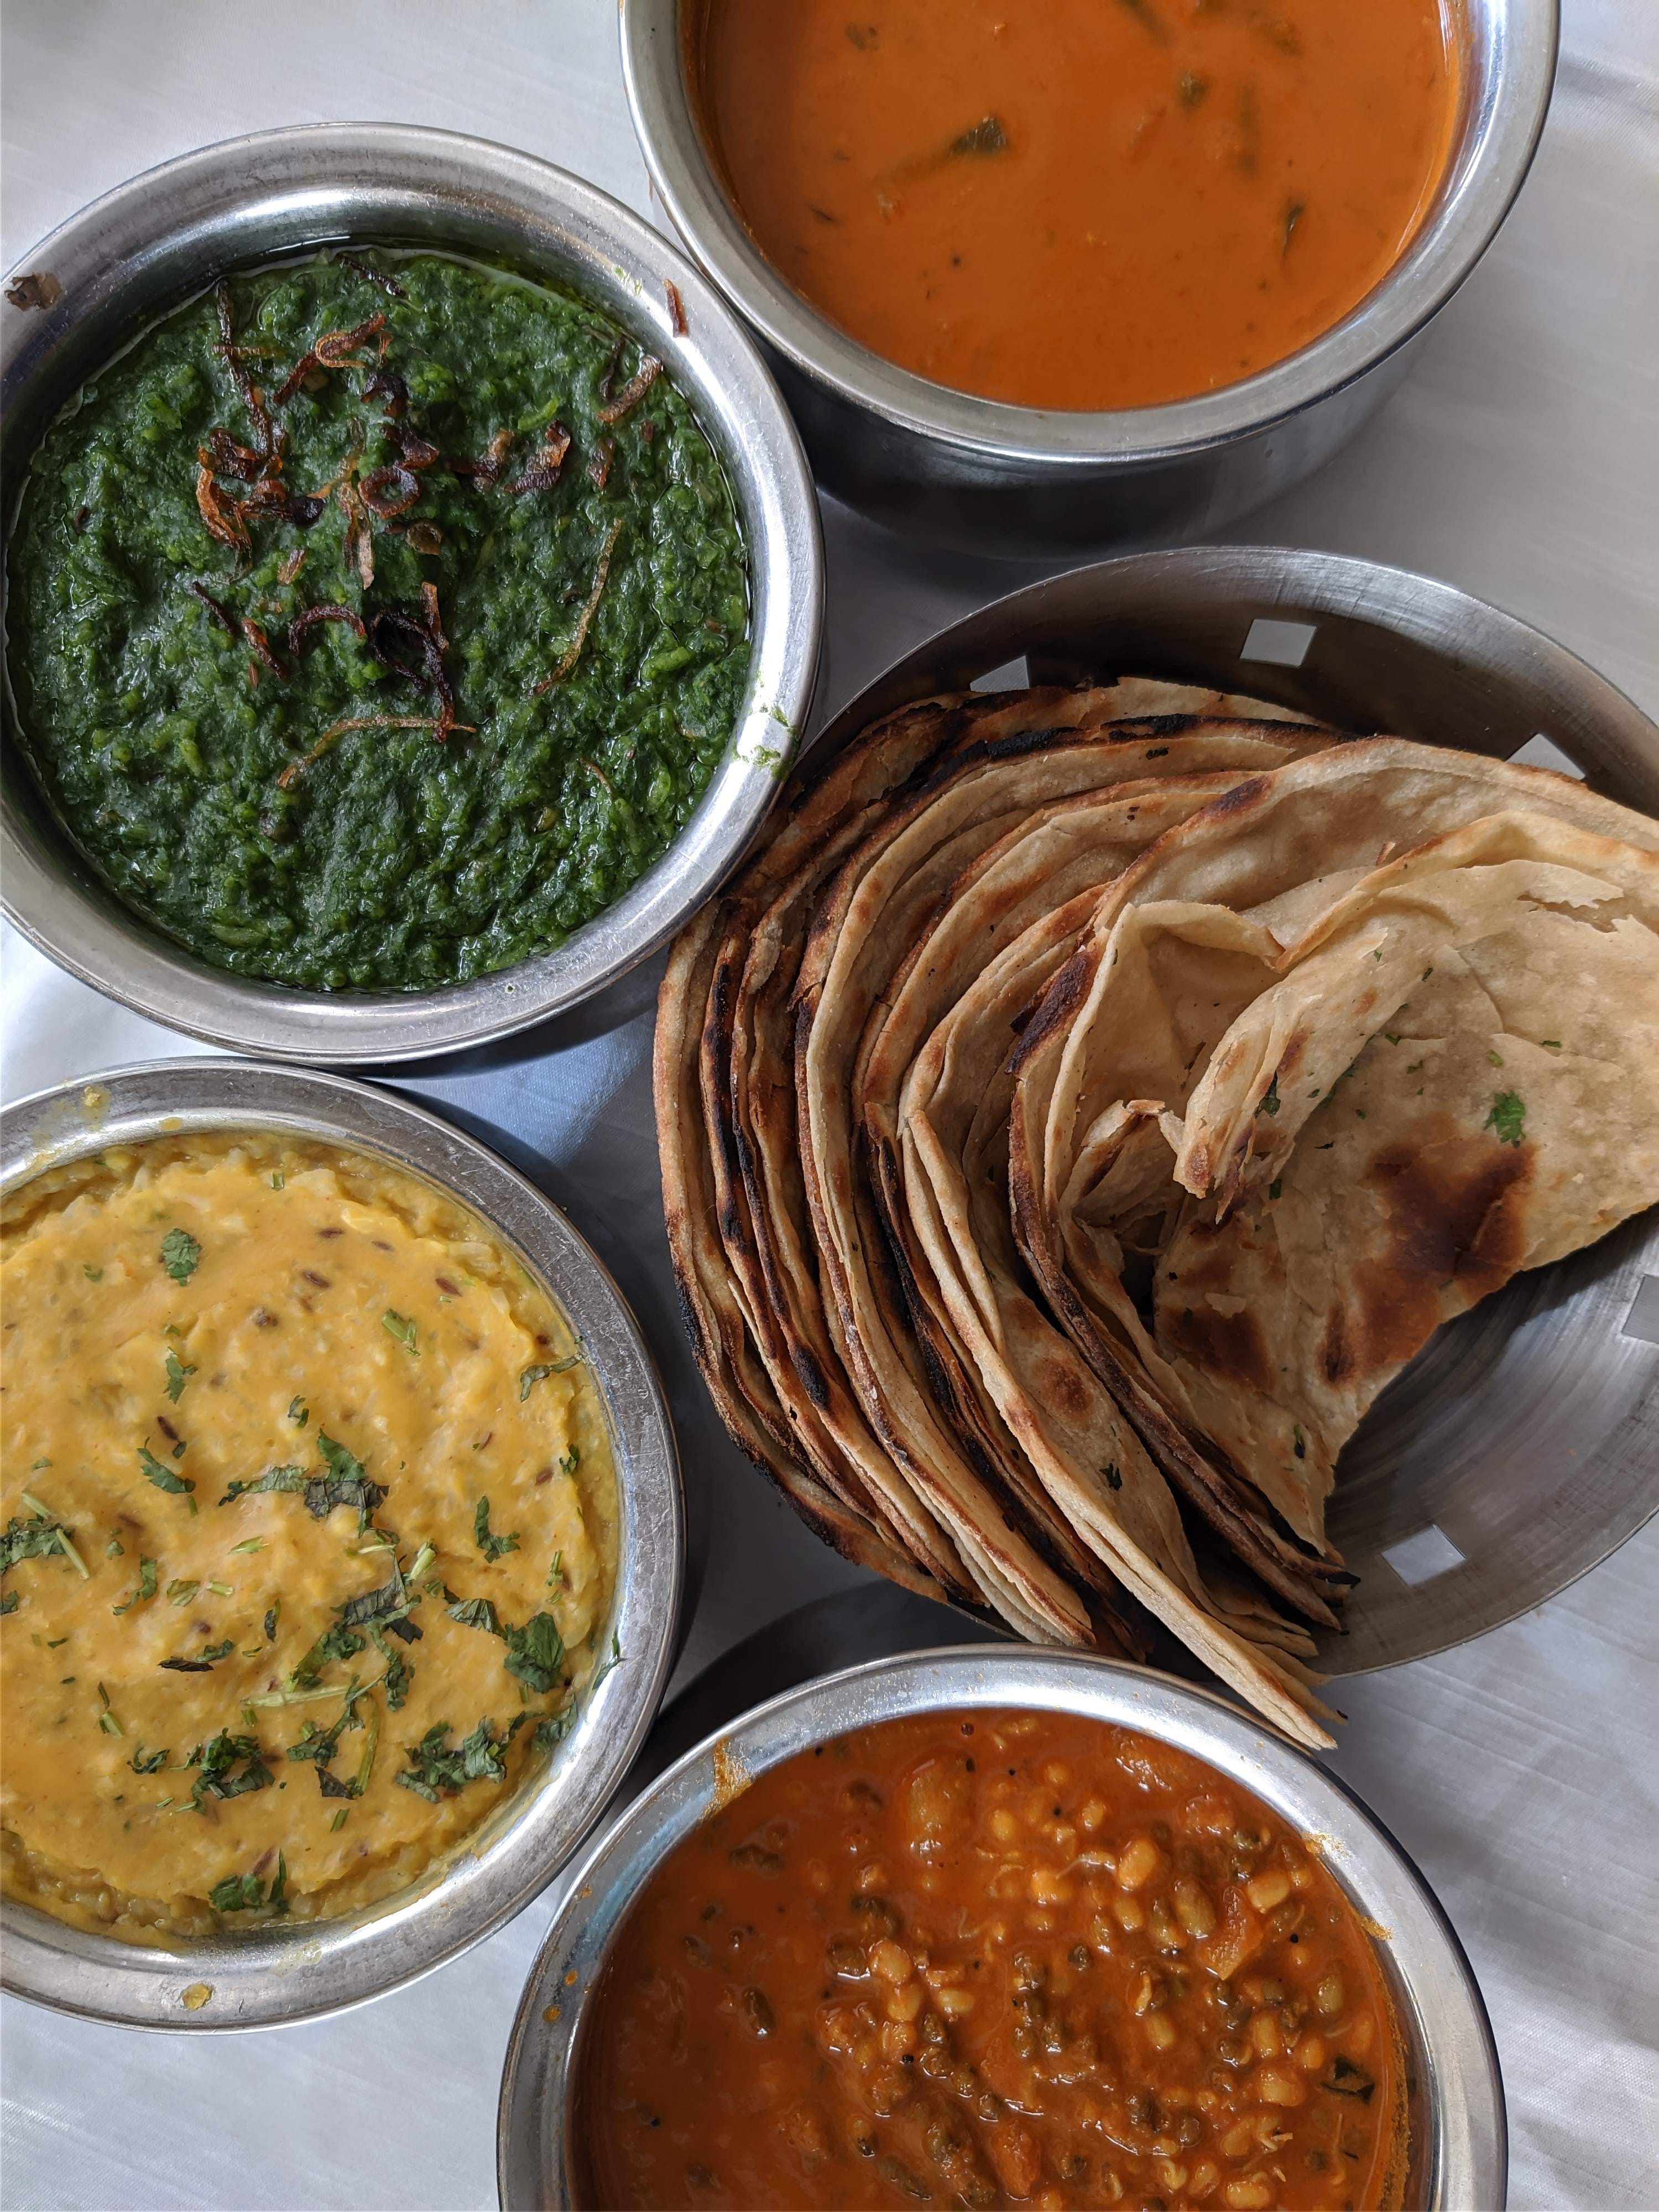 Dish,Food,Cuisine,Ingredient,Naan,Indian cuisine,Punjabi cuisine,Produce,Chutney,Saag